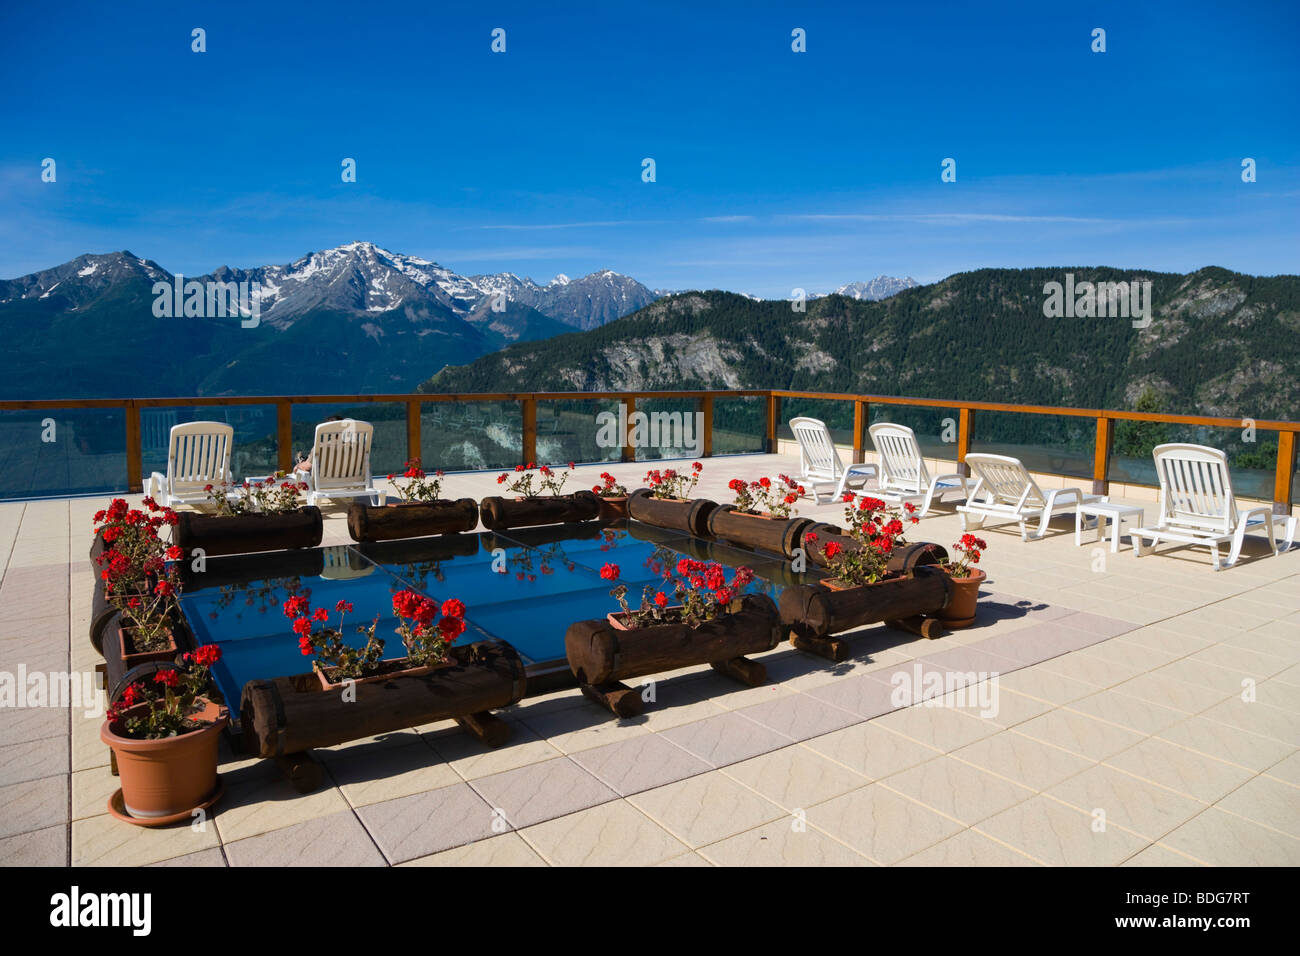 Mountain view from the terrace of Dalai Lama Village, camping club, Chatillon, Cervino Valley, Aosta Valley, Valle d'Aosta, Alp Stock Photo